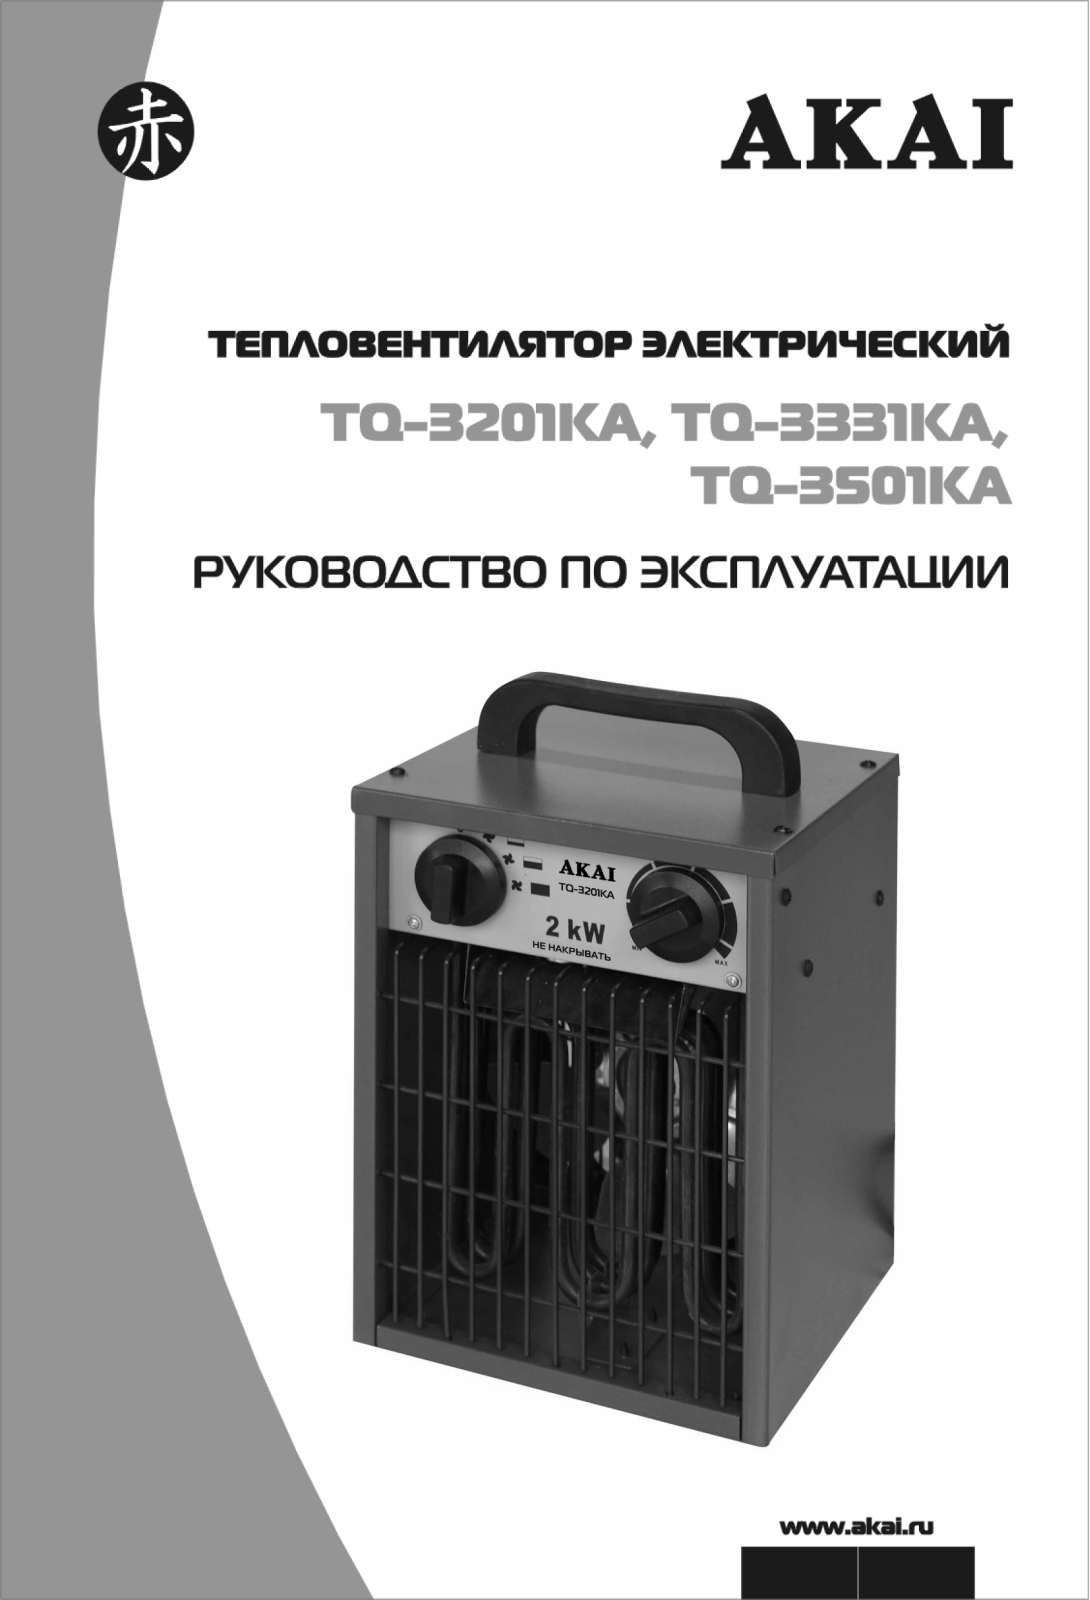 Akai TQ-3201KA, TQ-3331KA, TQ-3501KA User Manual